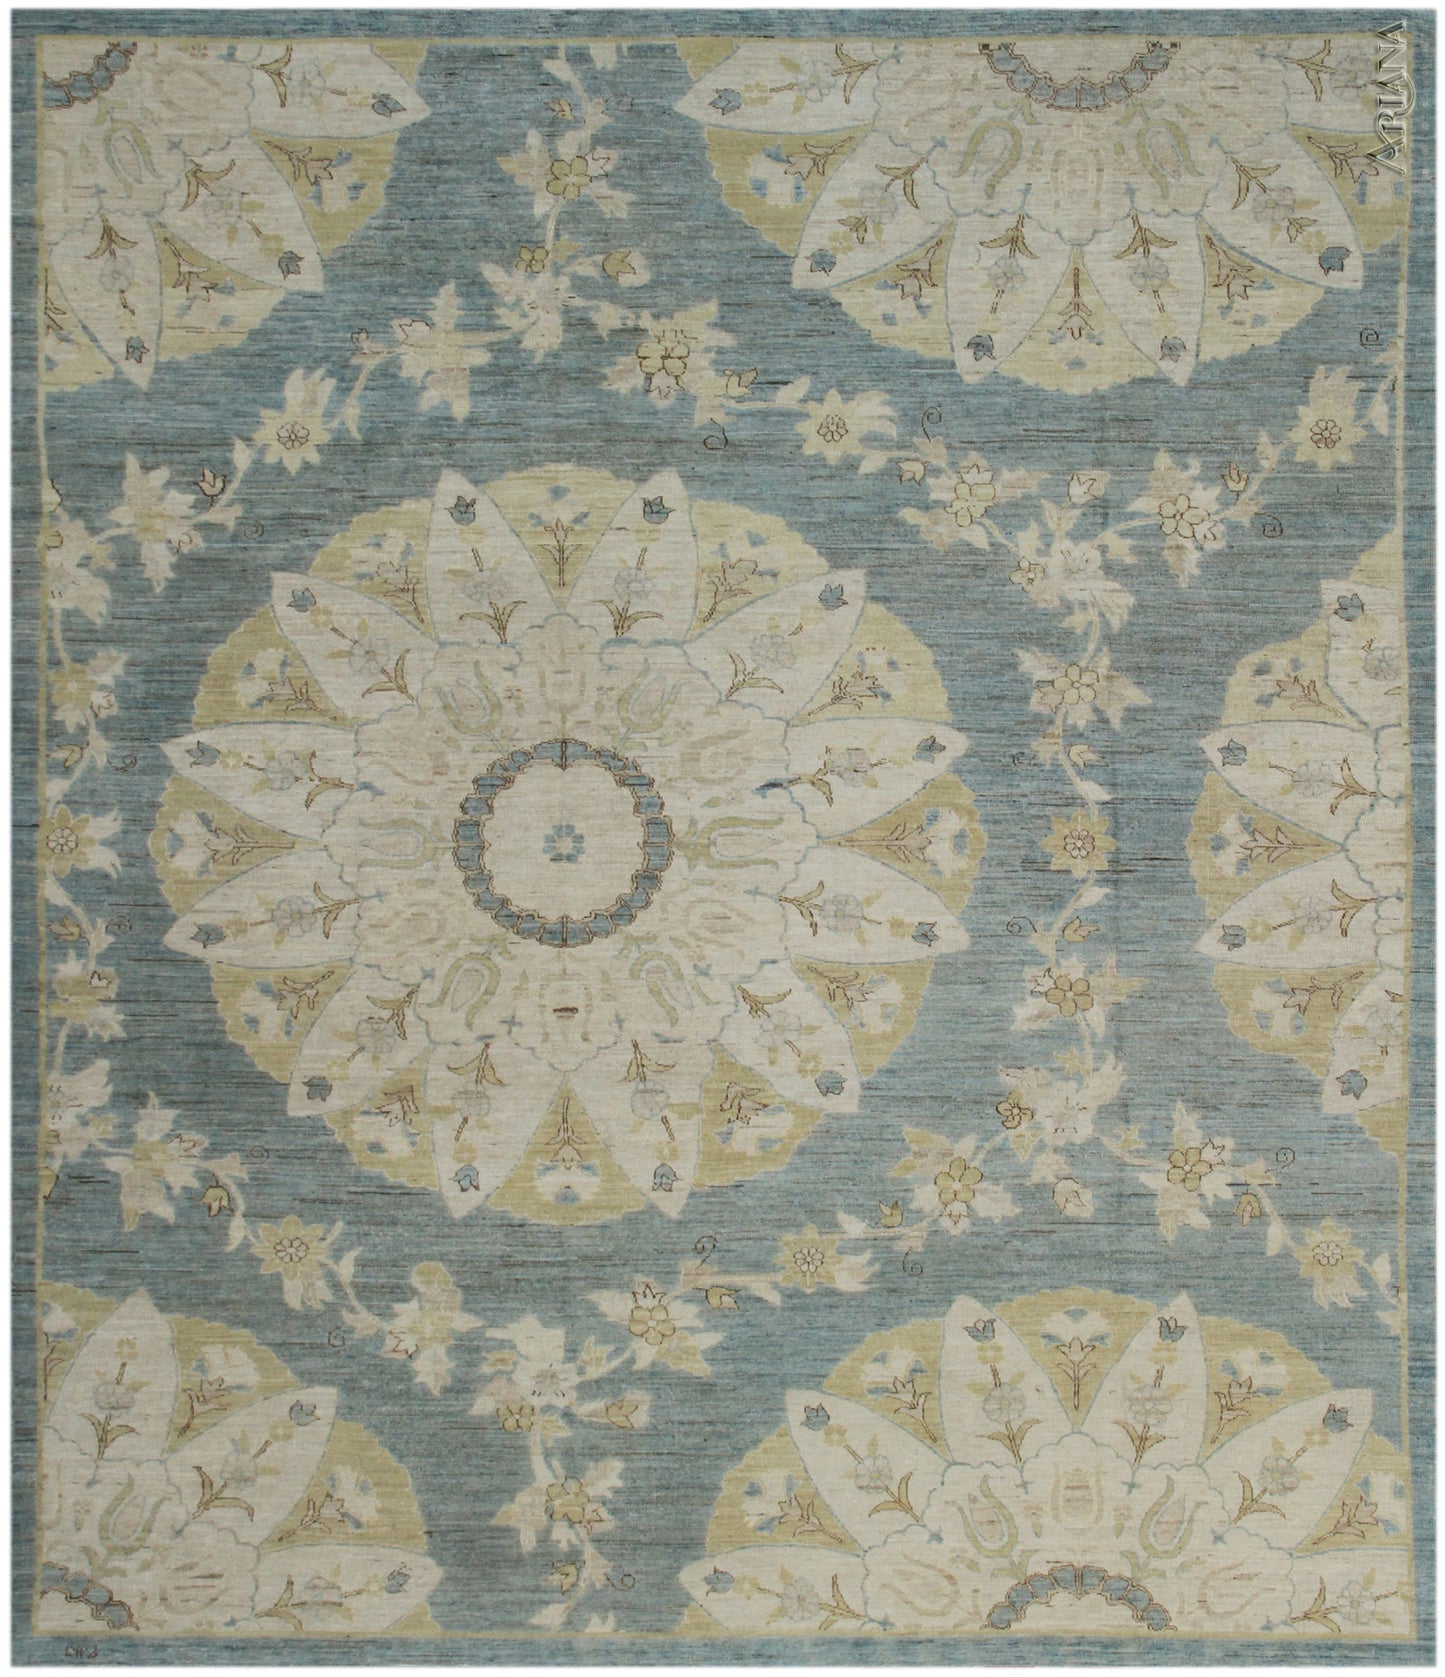 10' x 8' Ariana Soft Blue Ottoman Design Area Rug